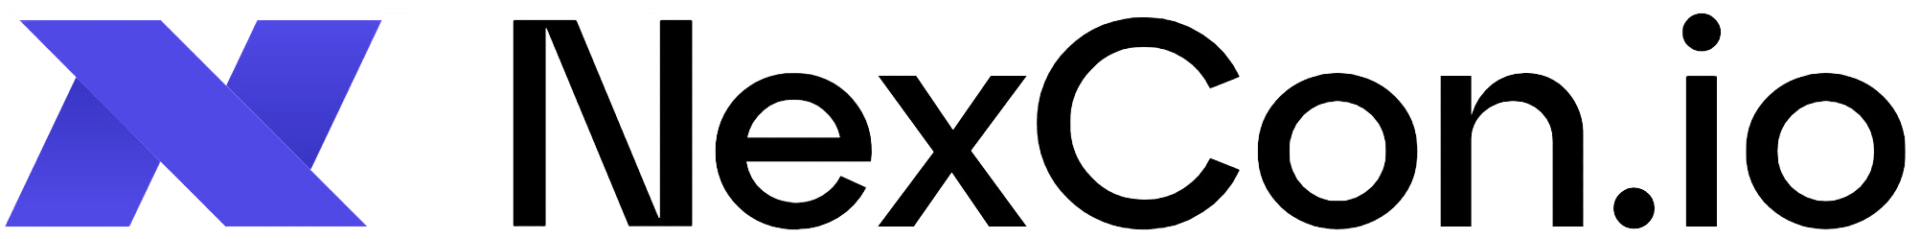 nexcon logo